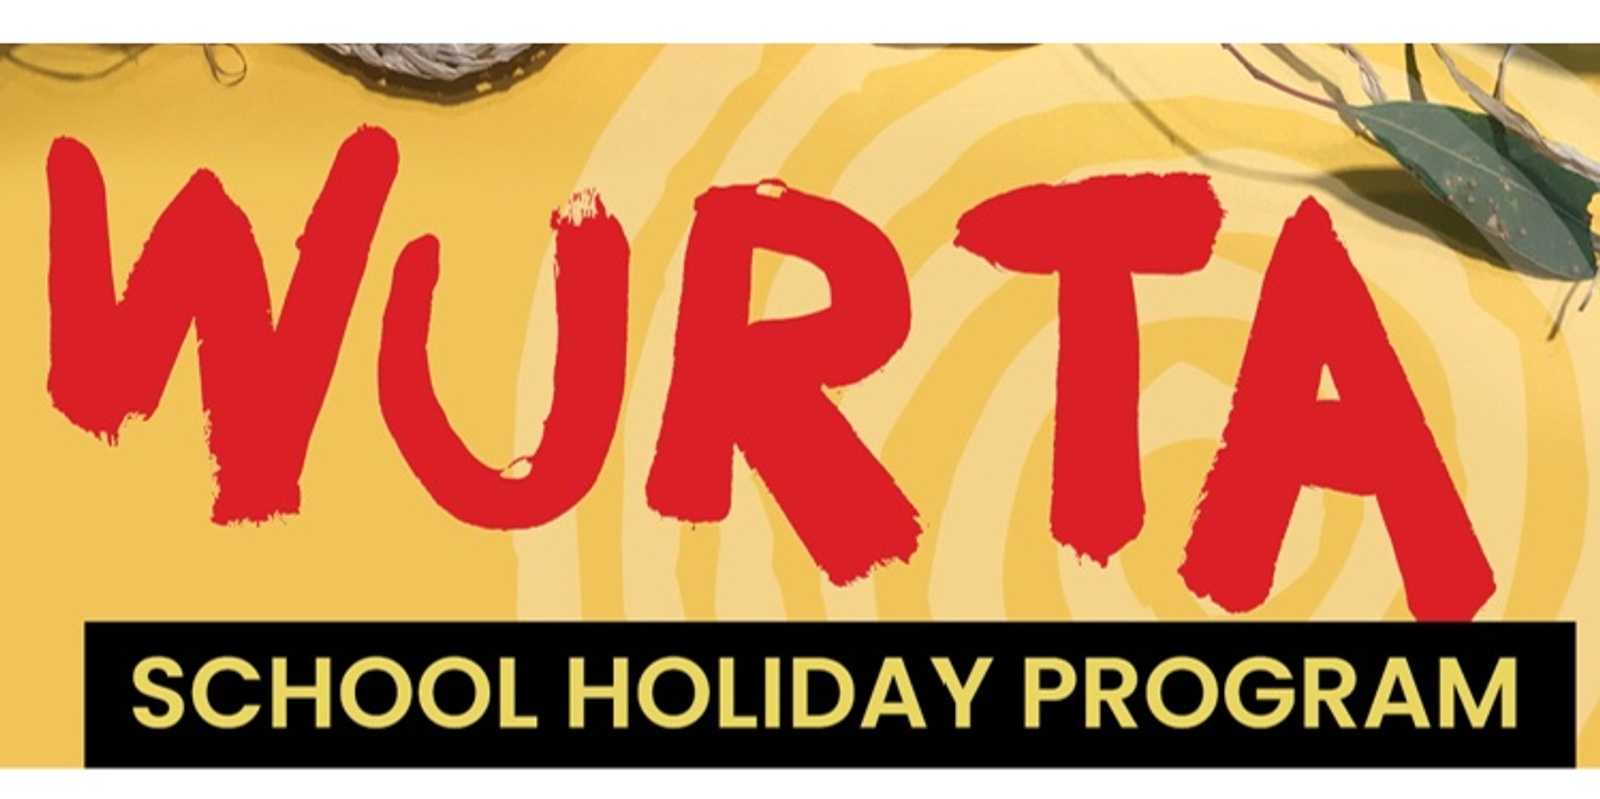 Banner image for Wurta School Holiday Program